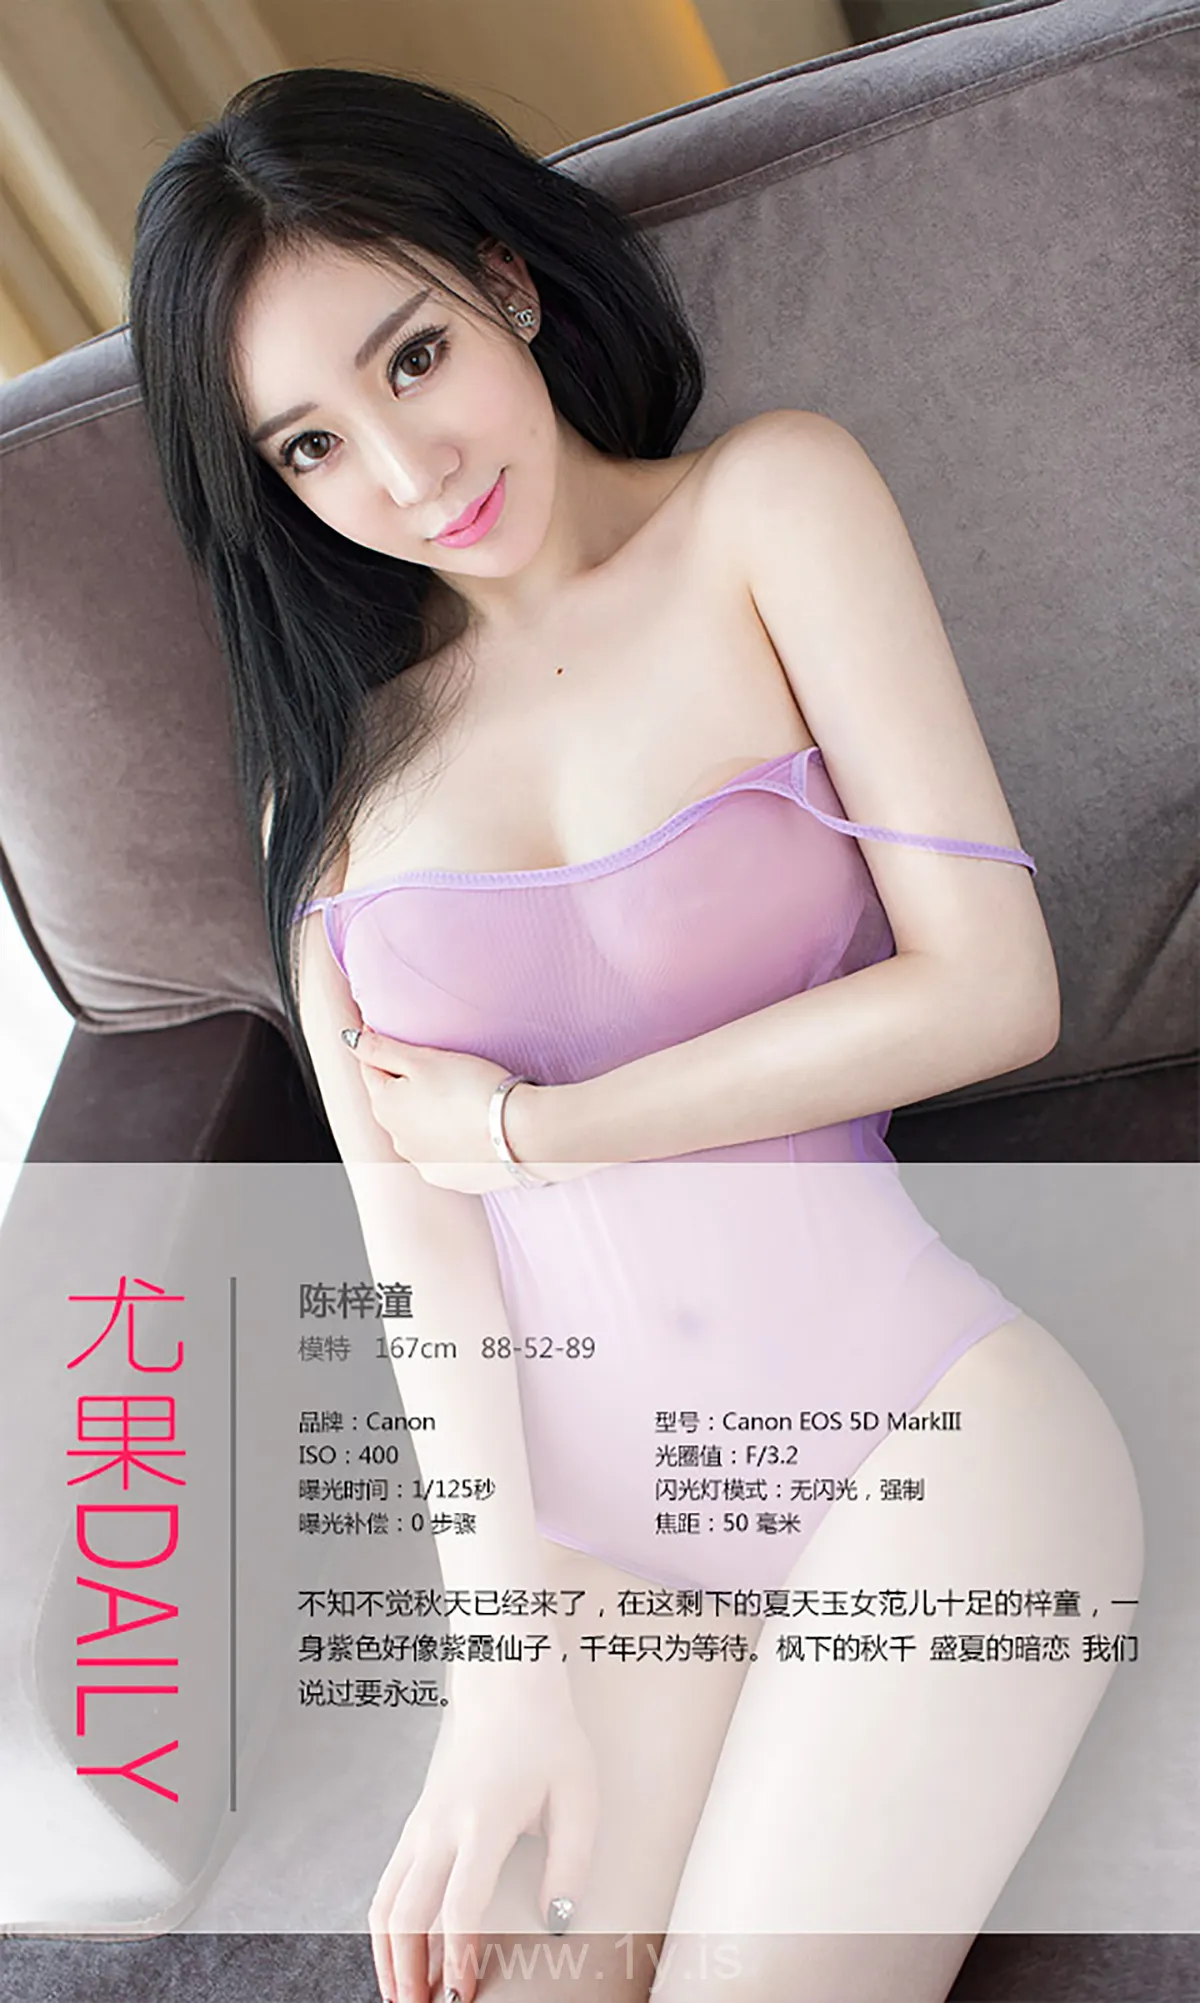 UGIRLS NO.130 Fancy & Classy Chinese Chick 陈梓潼剩下的盛夏